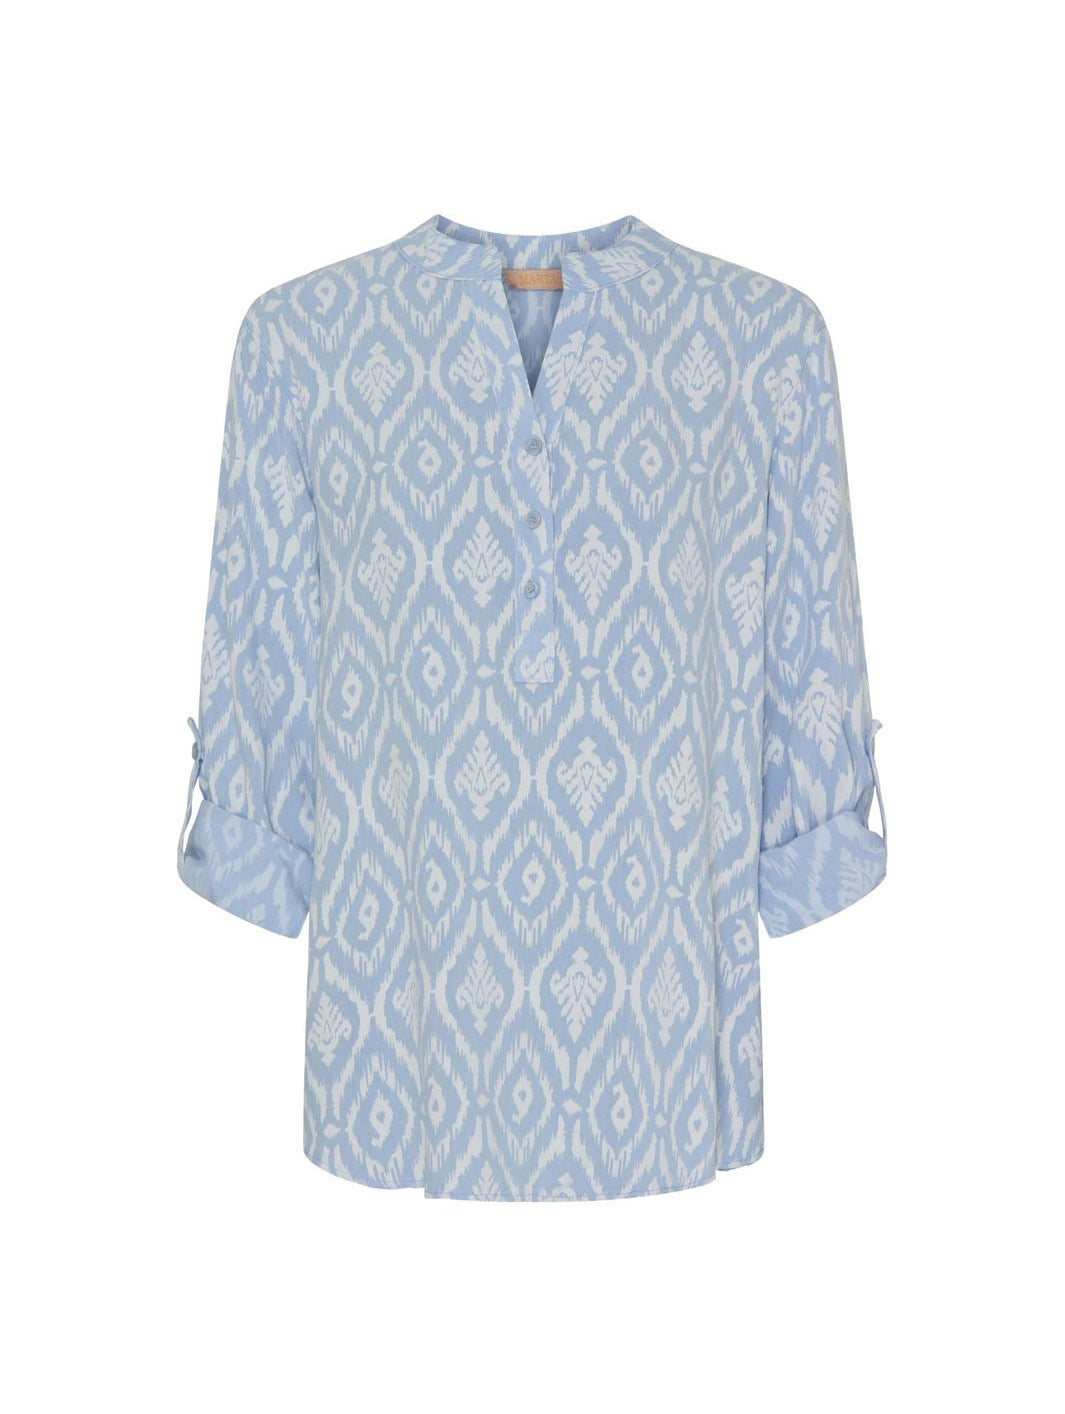 Marta du Chateau Elsa shirt light blue - Online-Mode